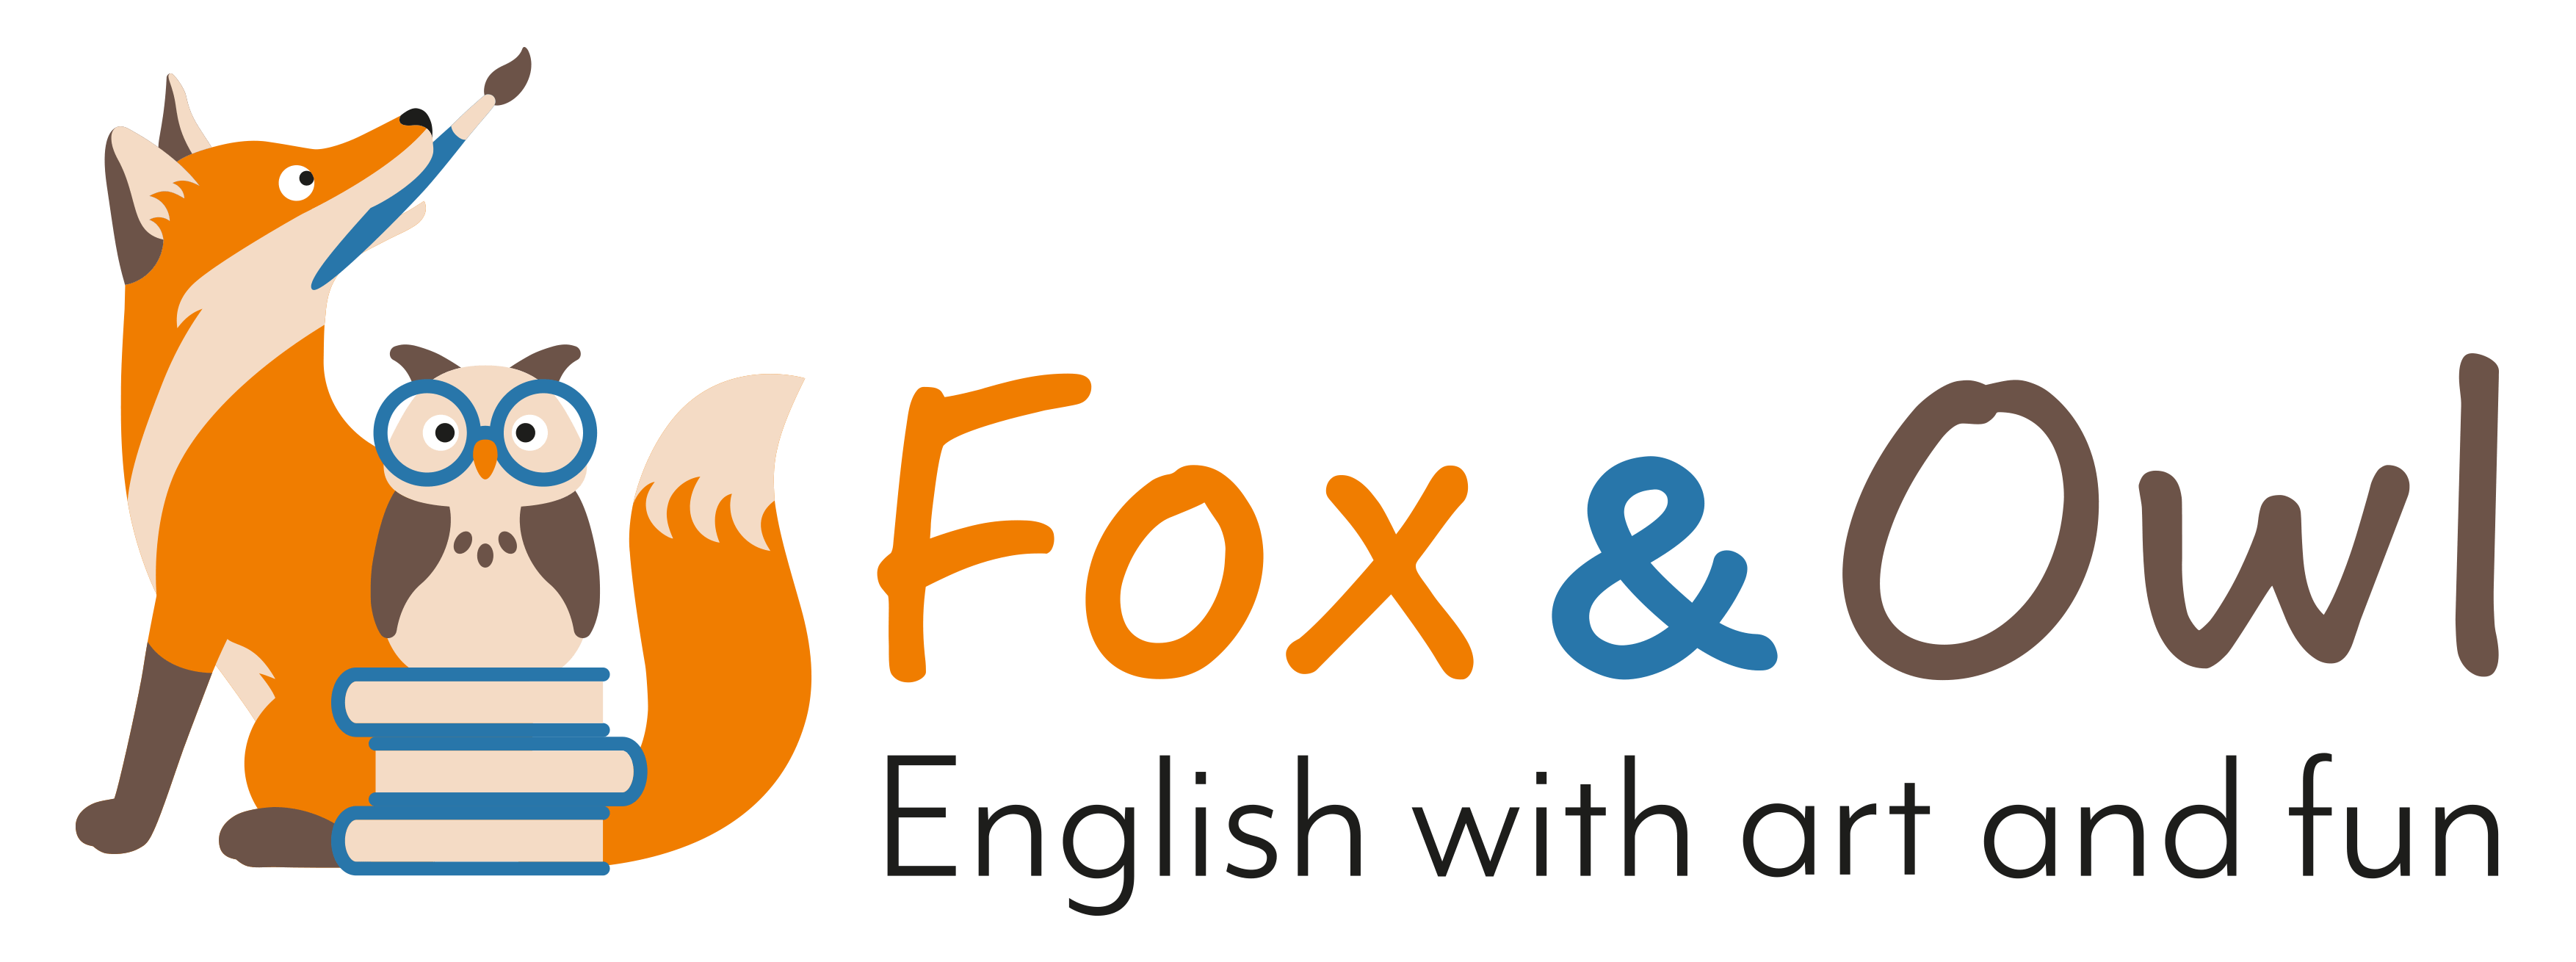 Fox & Owl English with art and fun - Ludwigsburg und Wiesbaden